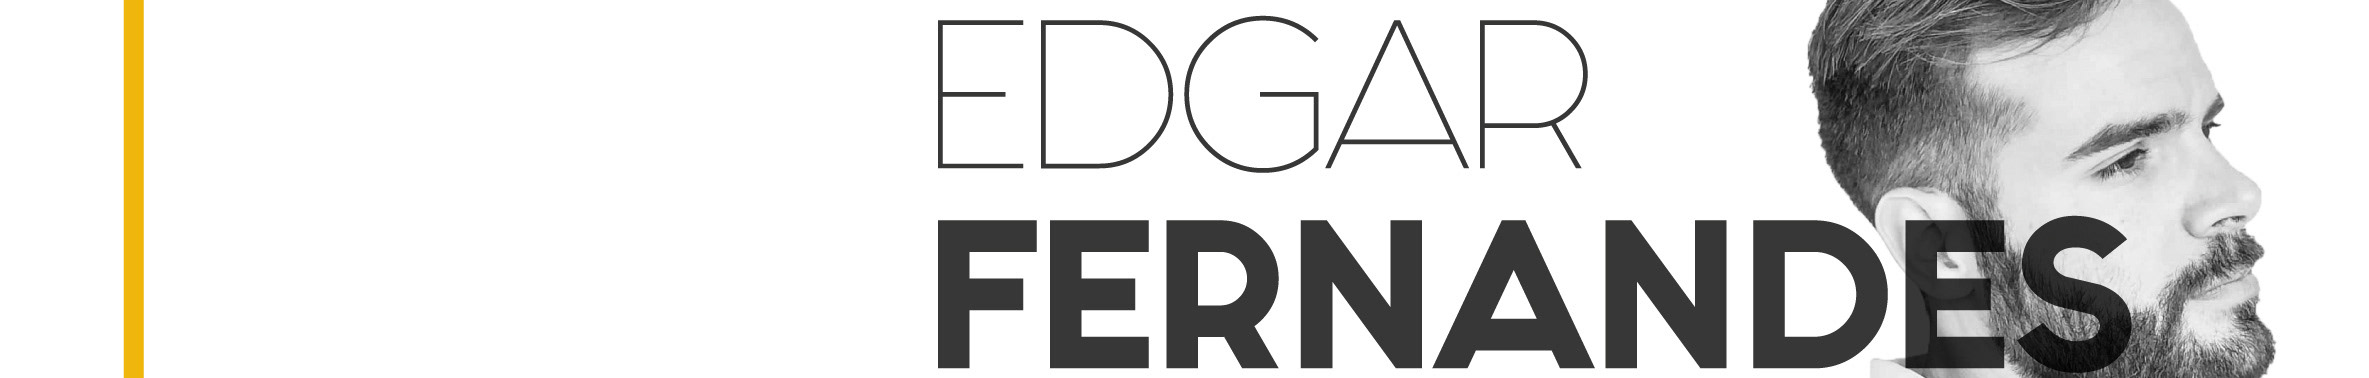 Edgar Fernandes's profile banner